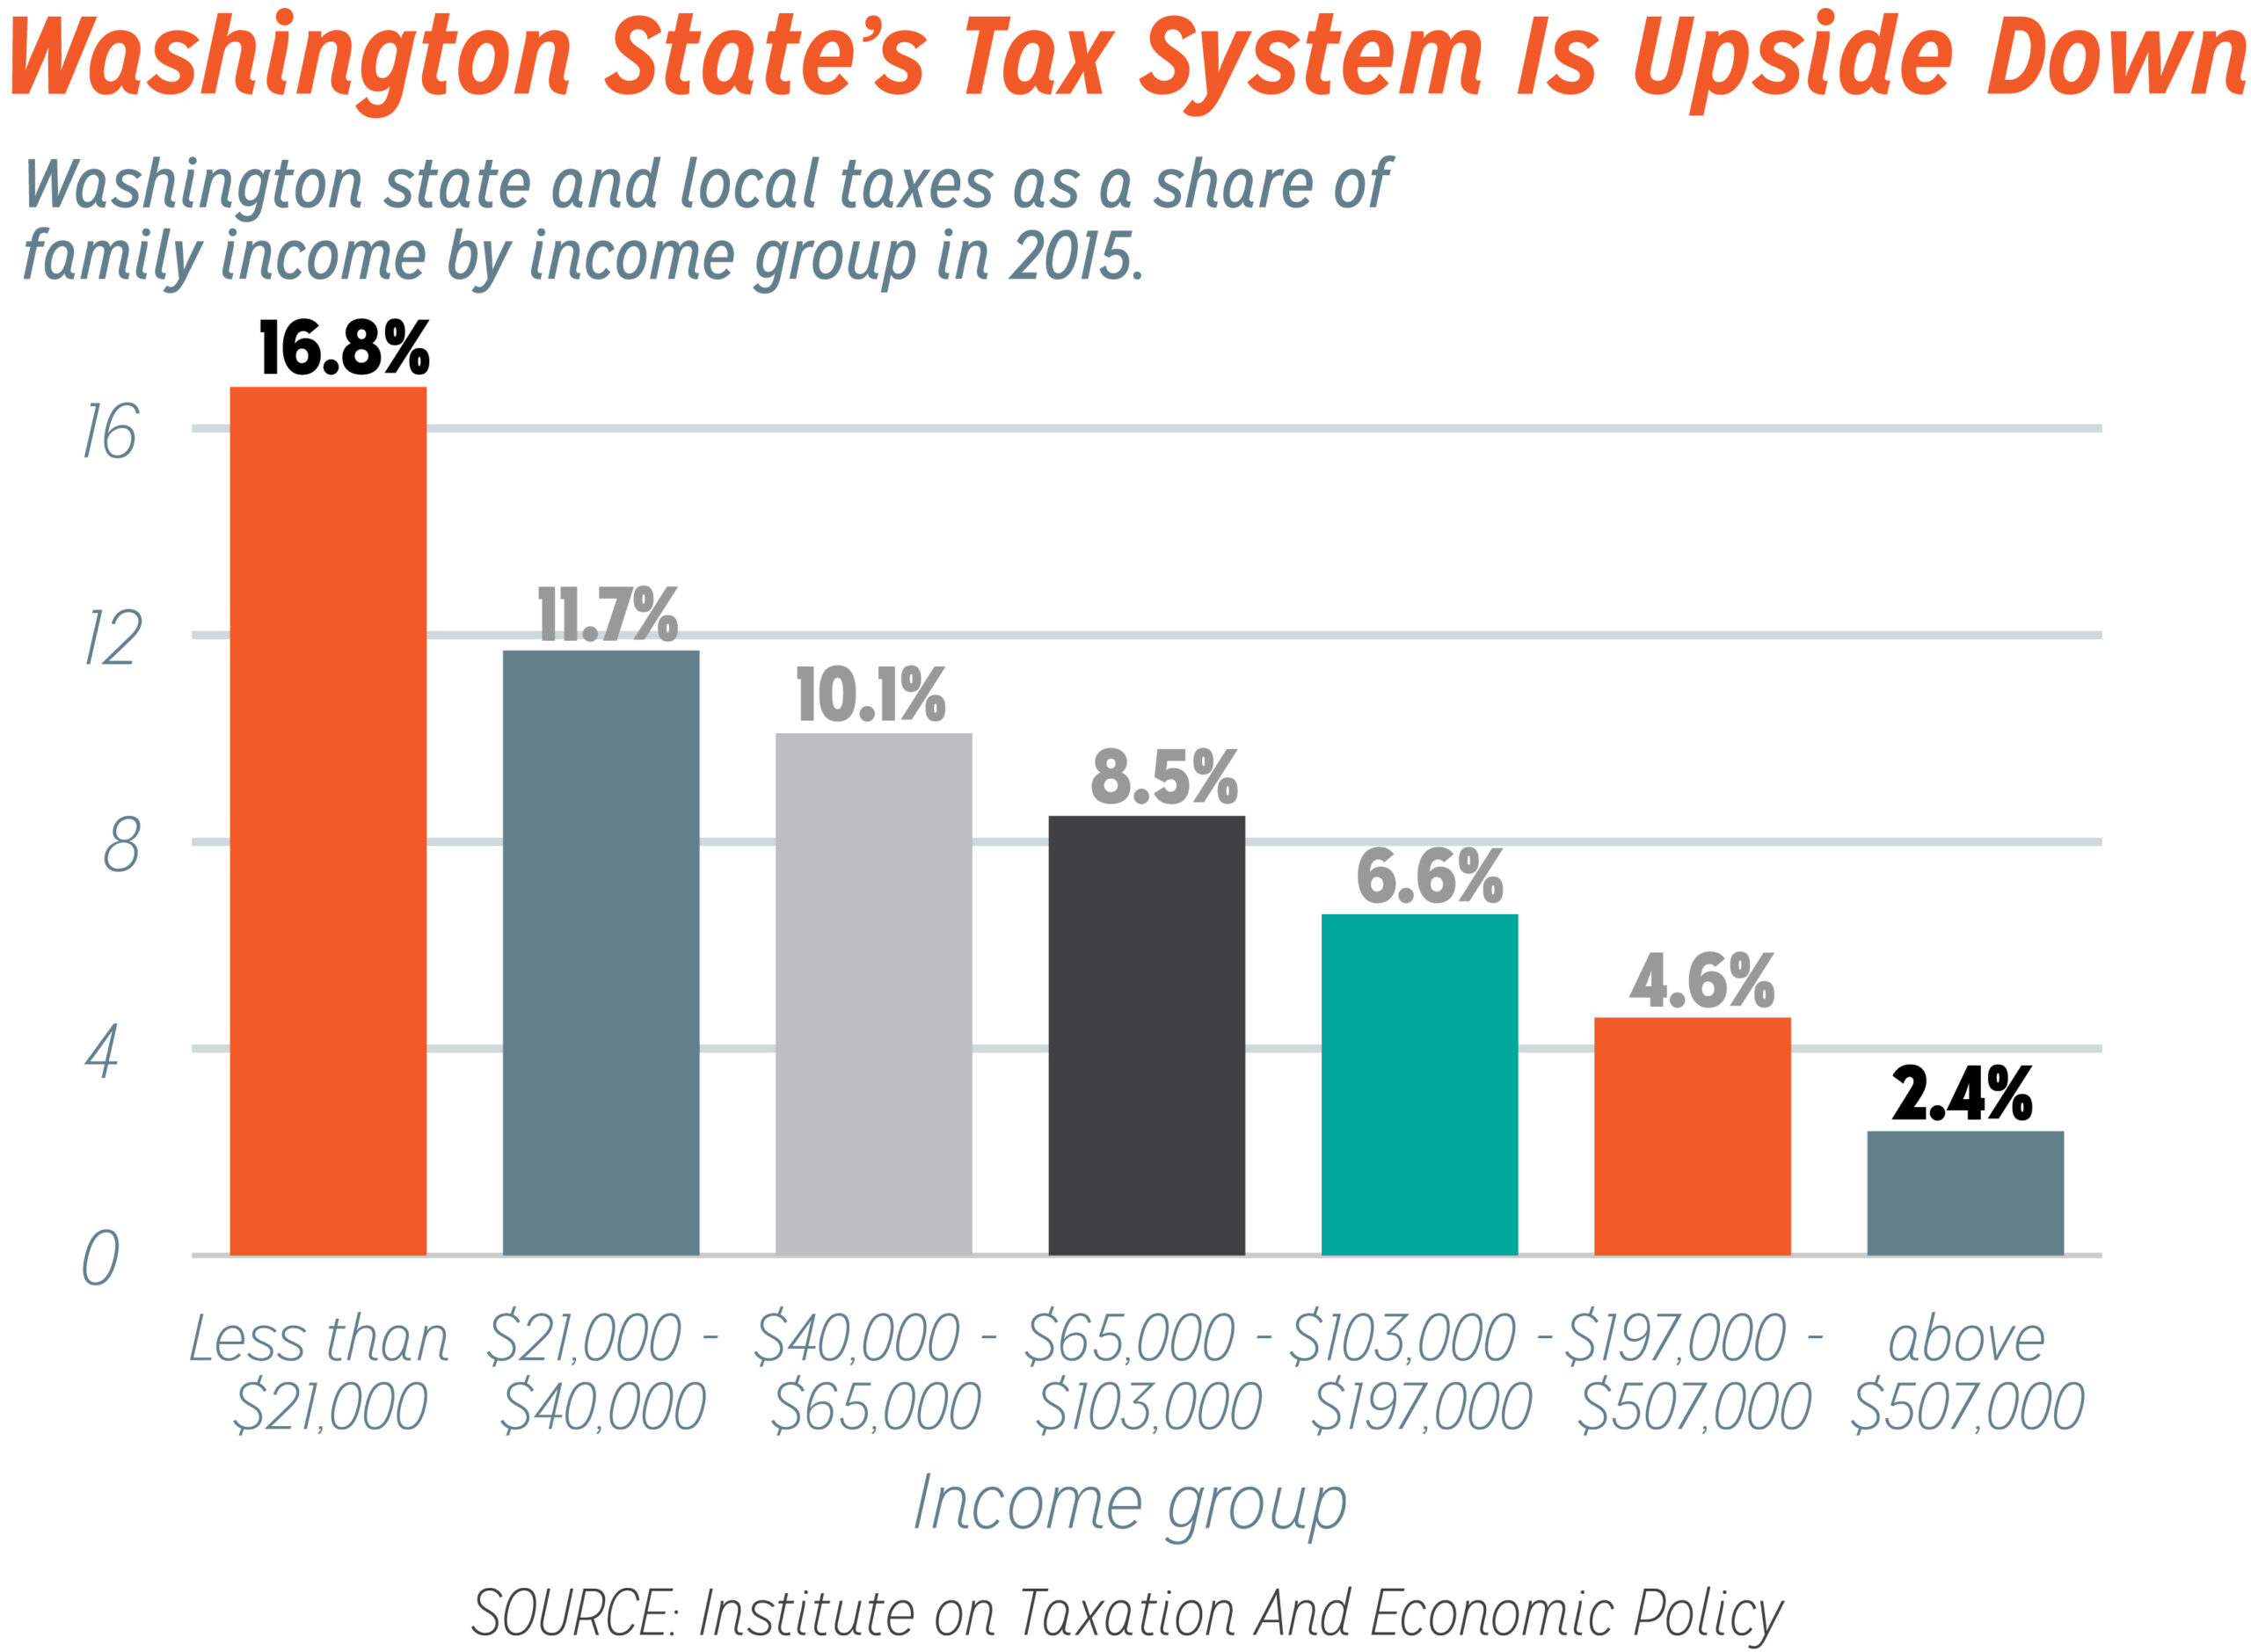 Washington State's tax code is upside down